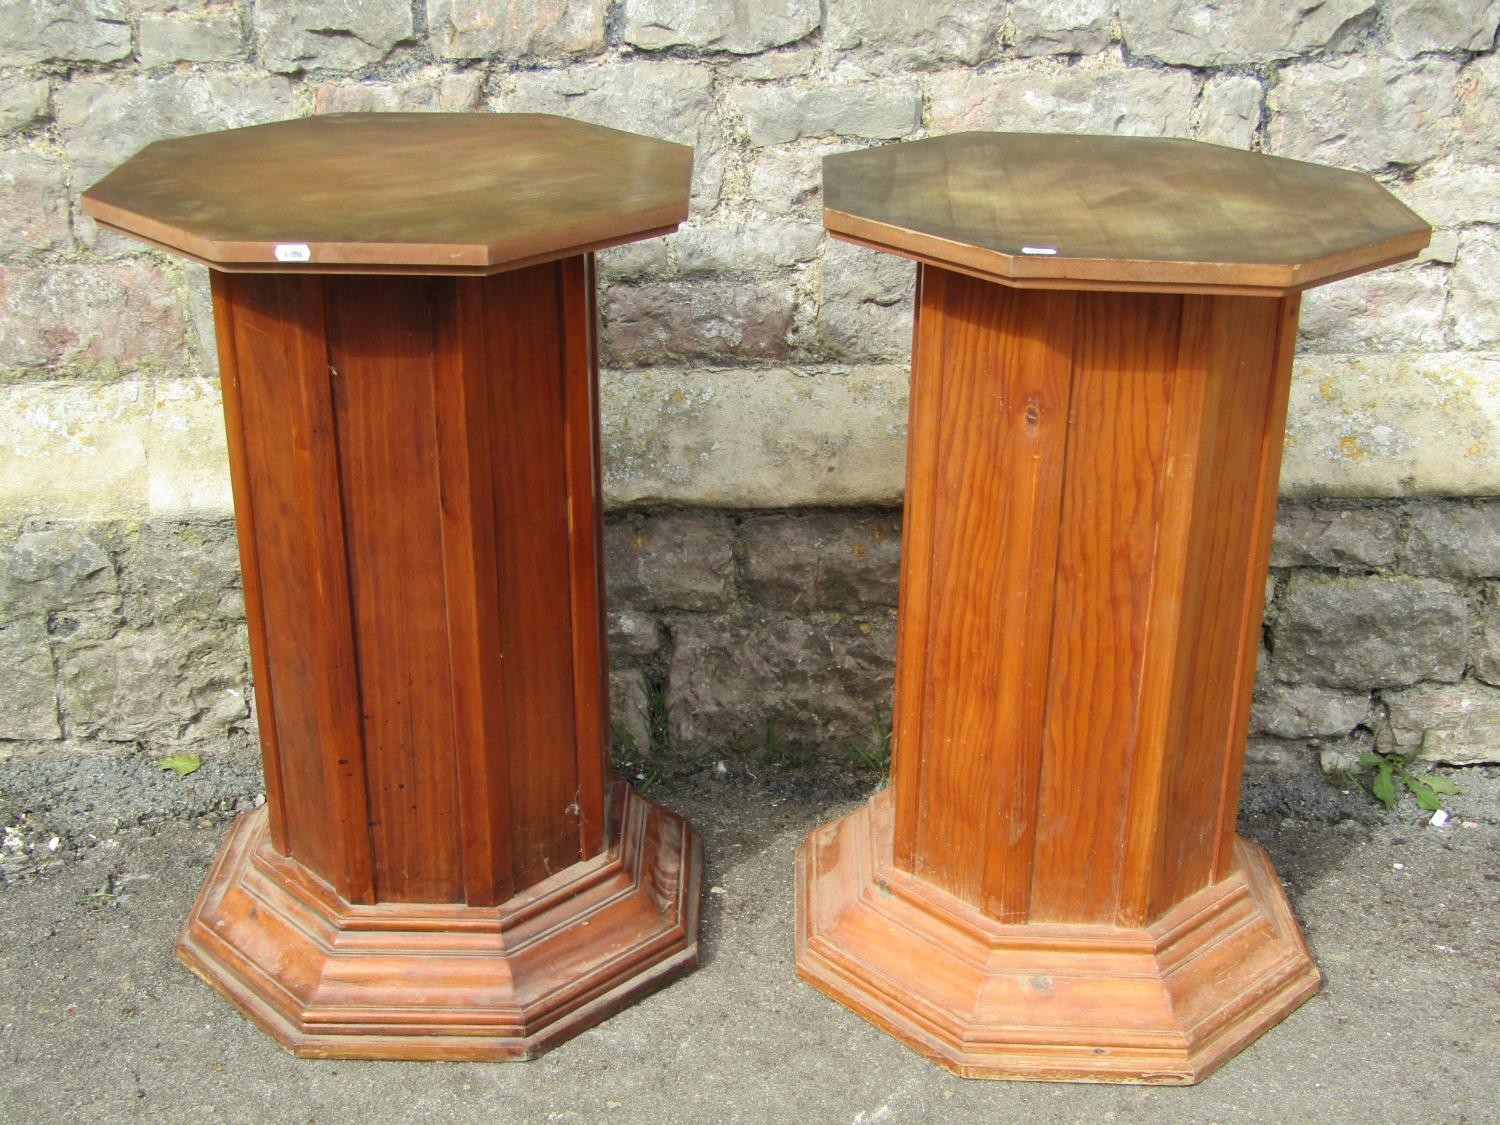 Pair of octagonal pedestals in pine, 75cm high